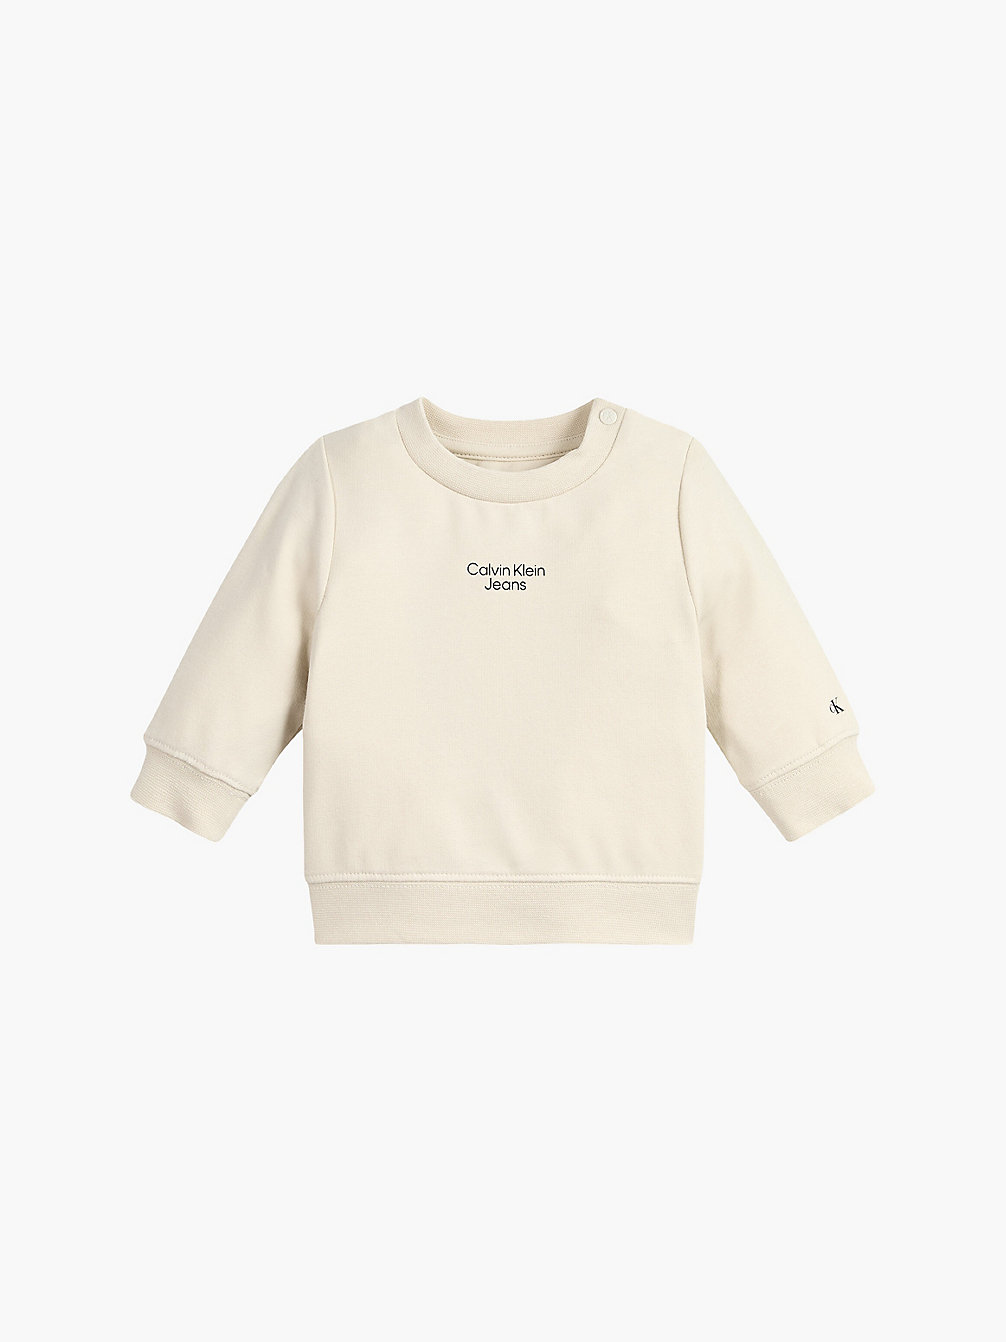 MUSLIN > Newborn-Sweatshirt Van Biologisch Katoen > undefined newborn - Calvin Klein